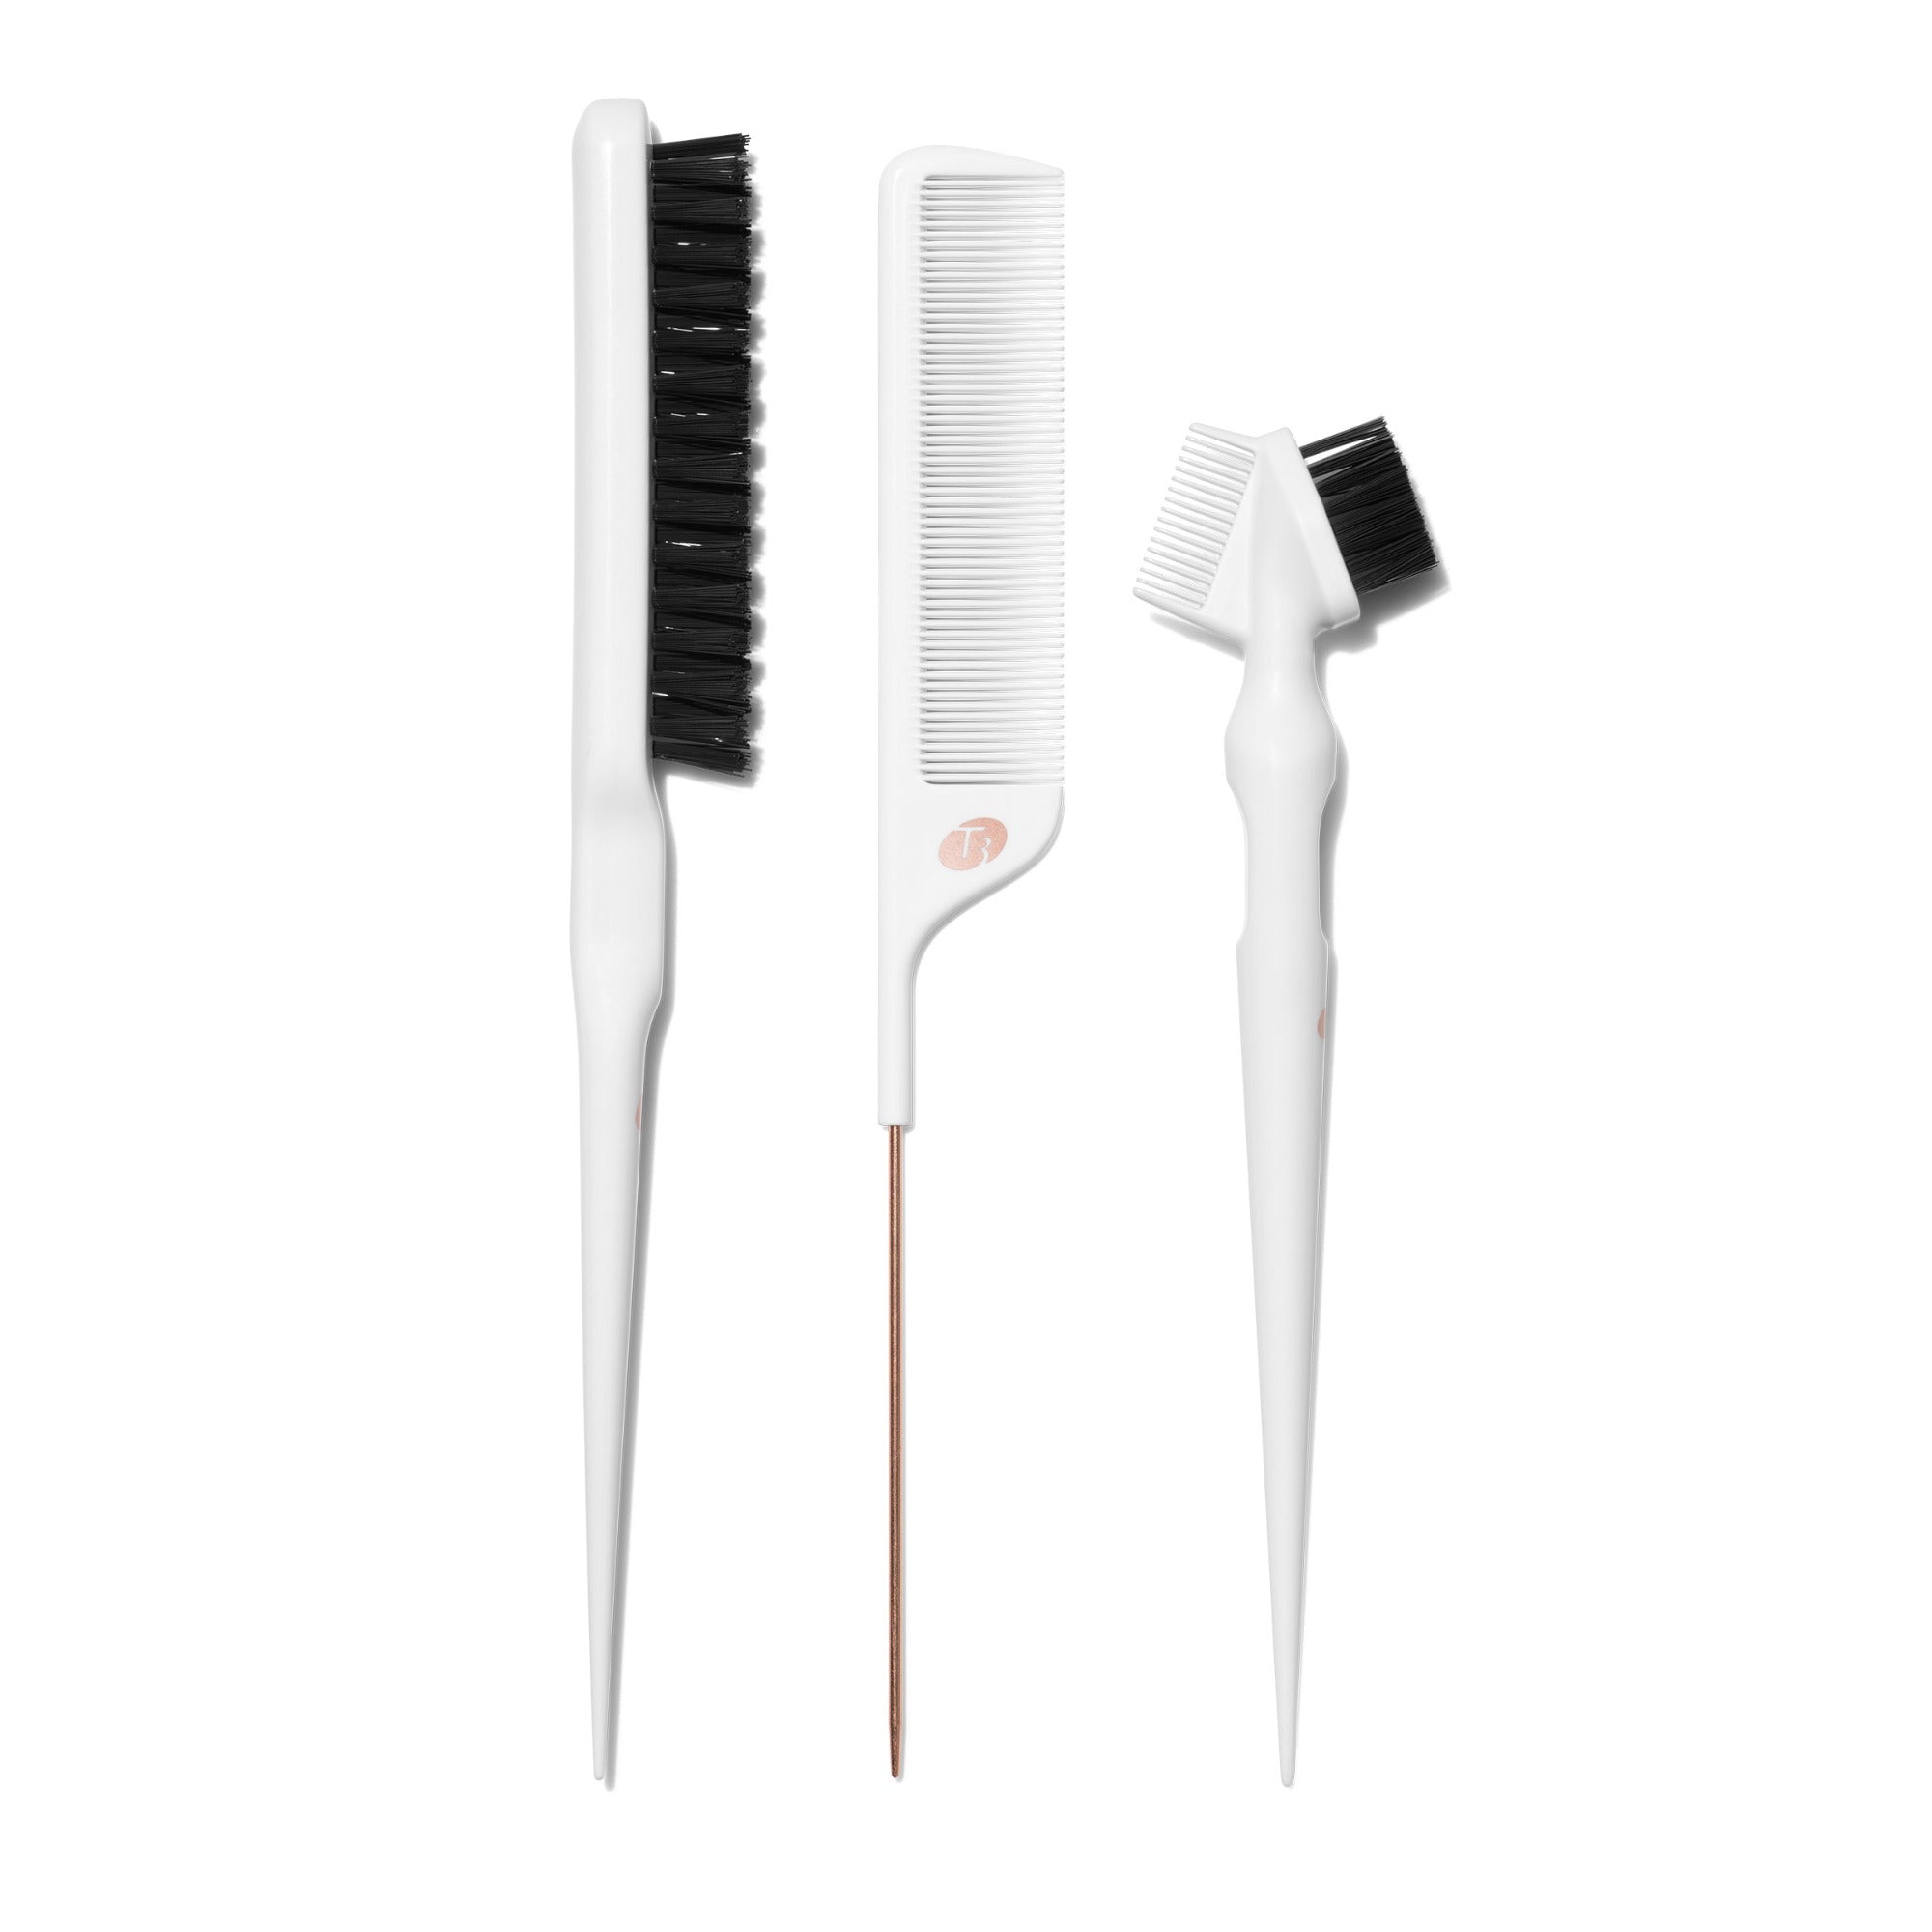 T3 Detail Kit including Pintail Comb, Teasing Brush, and Edge Brush